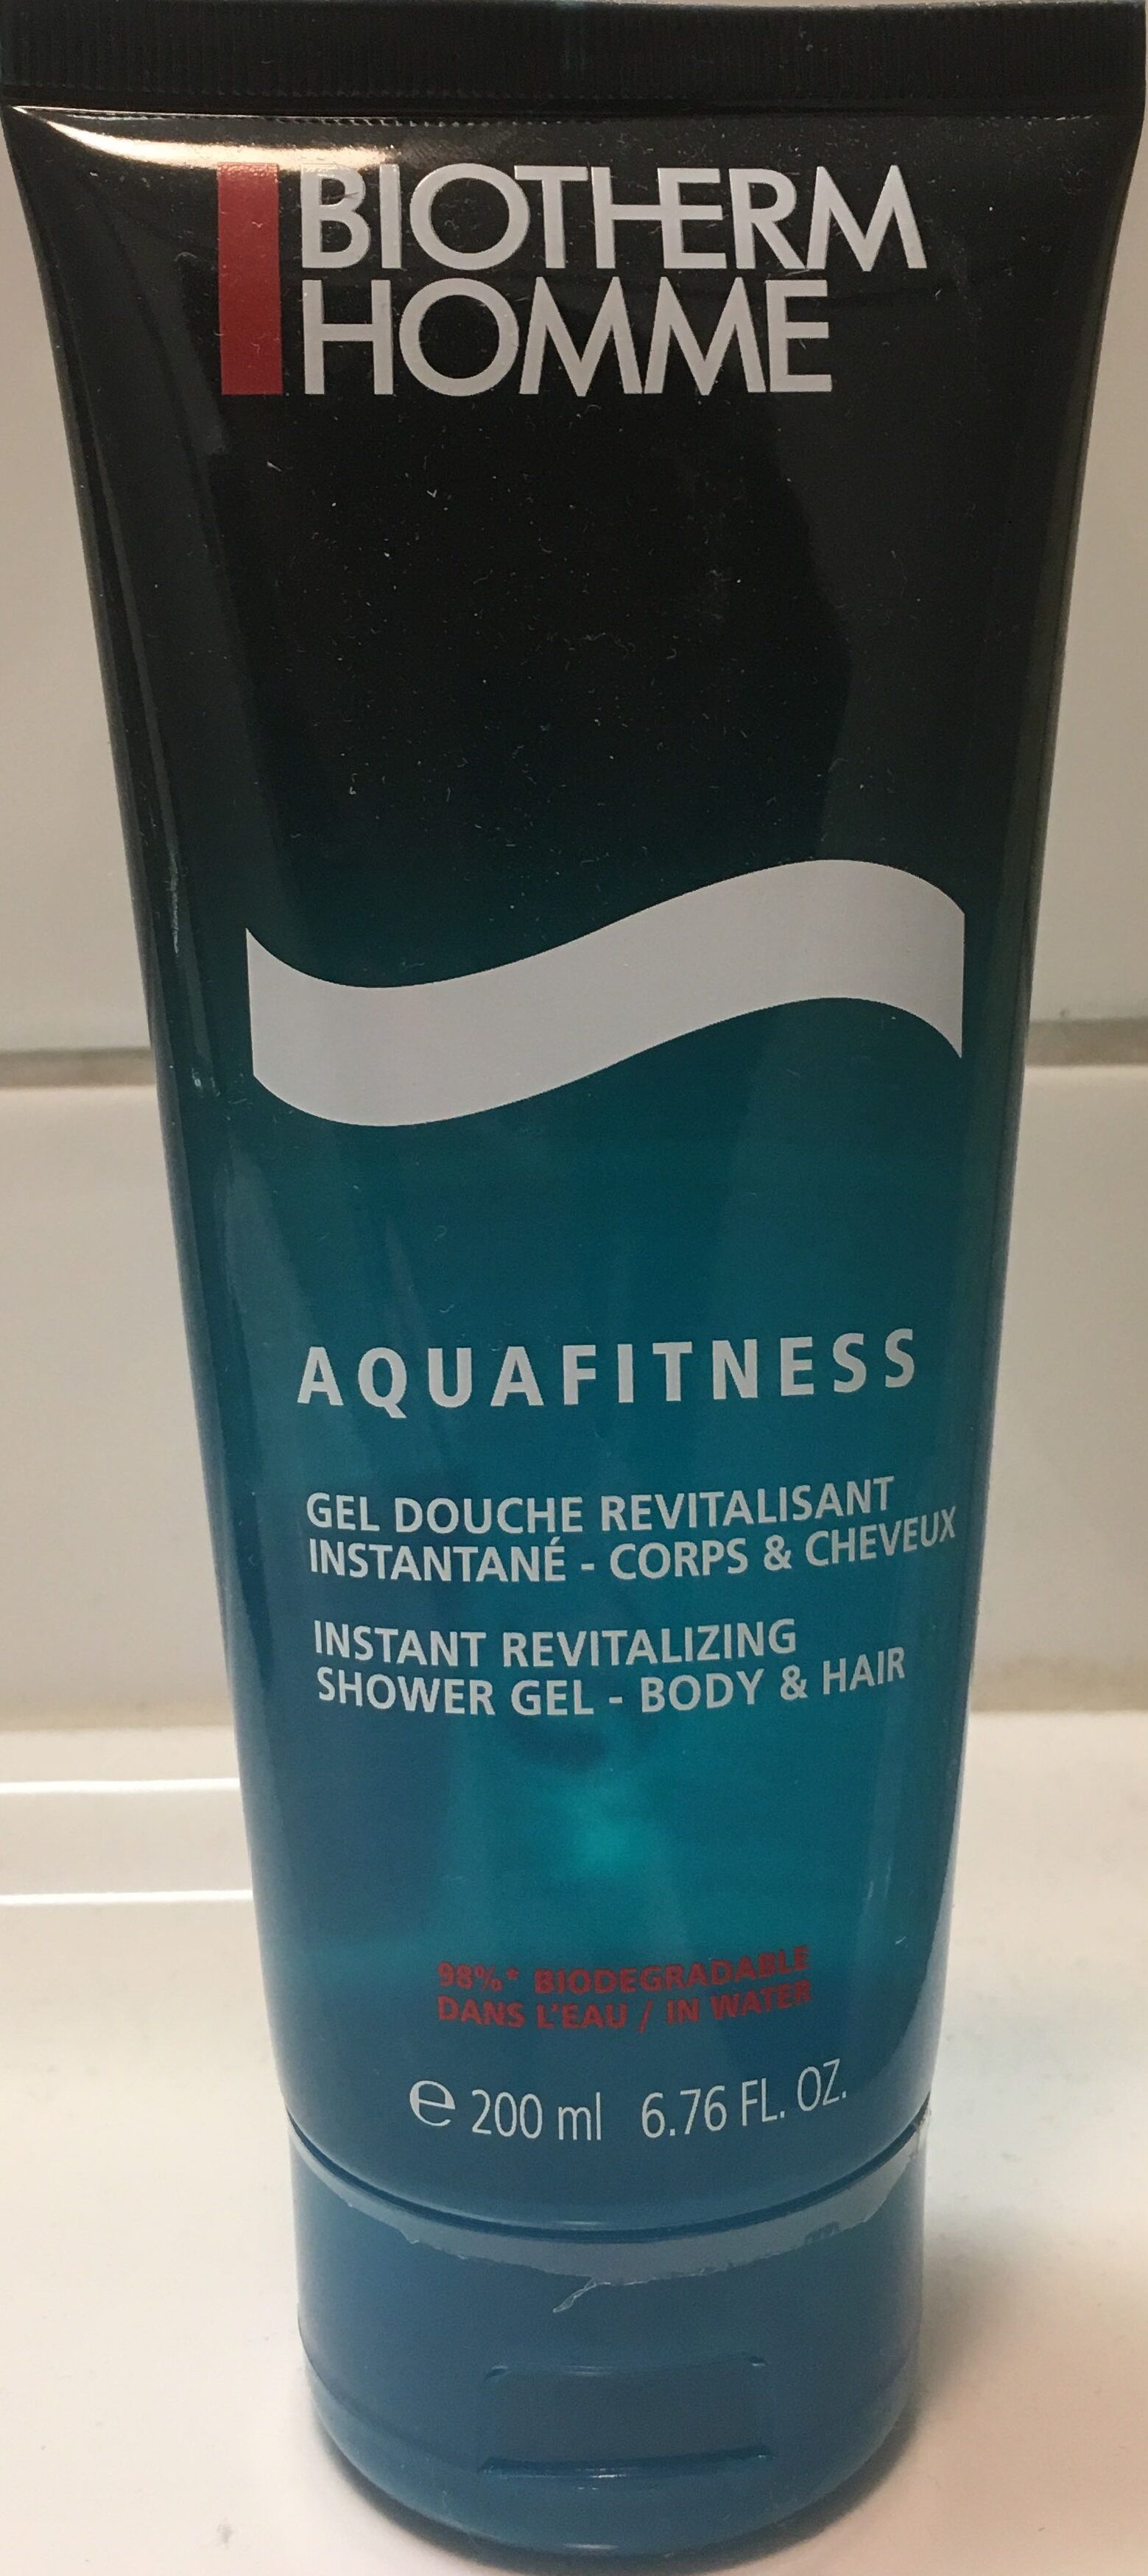 Aquafitness - Produit - en